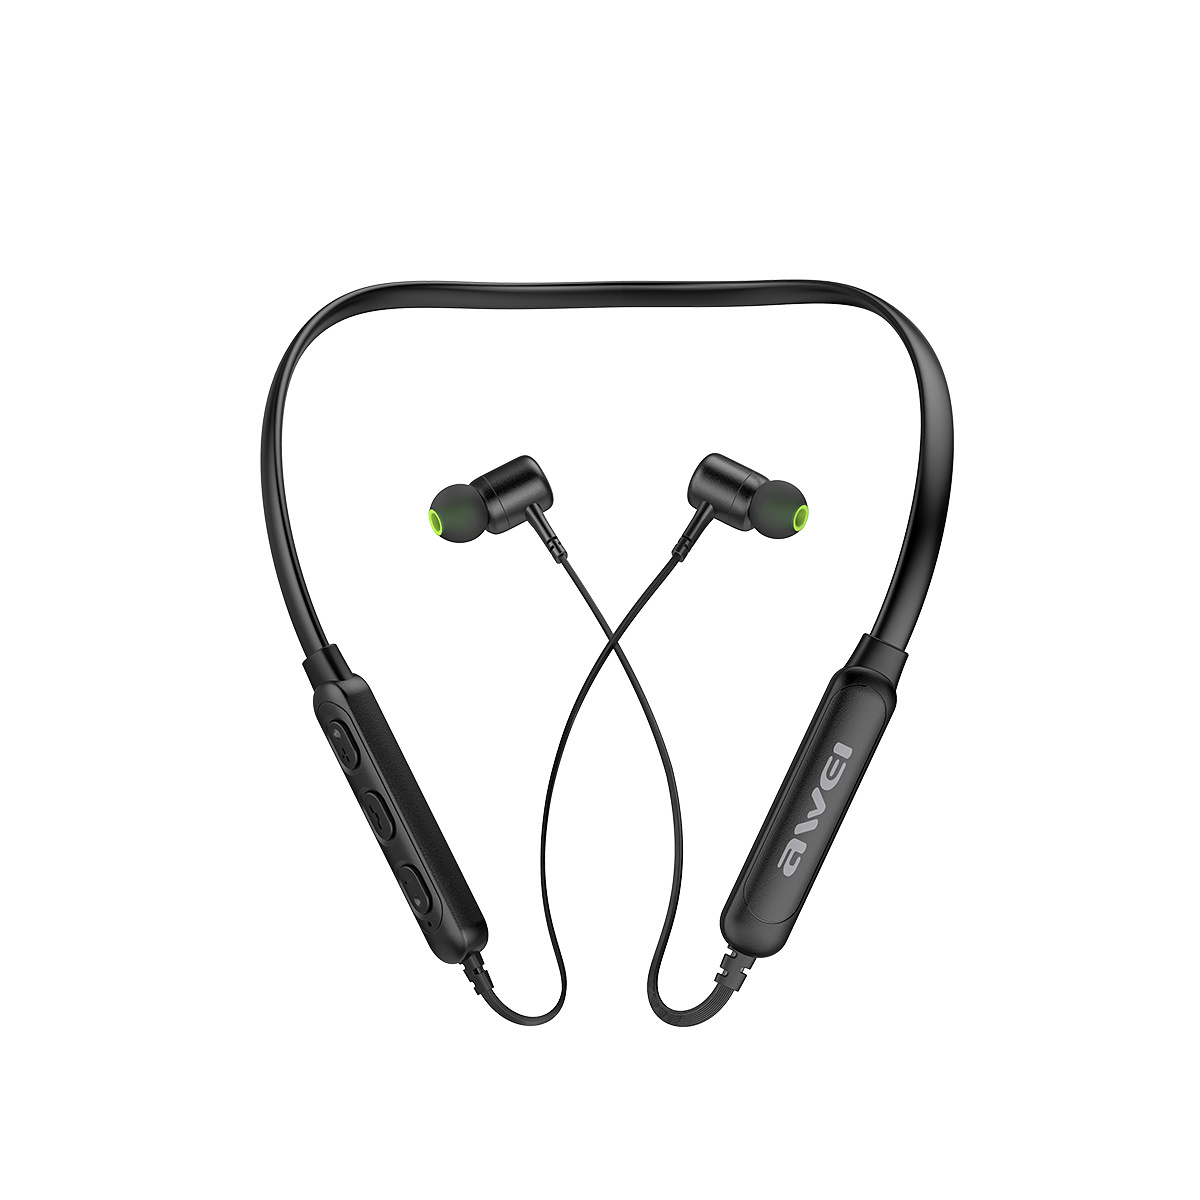 AWEI G30BL In-ear trådlösa hörlurar bluetooth med nackband